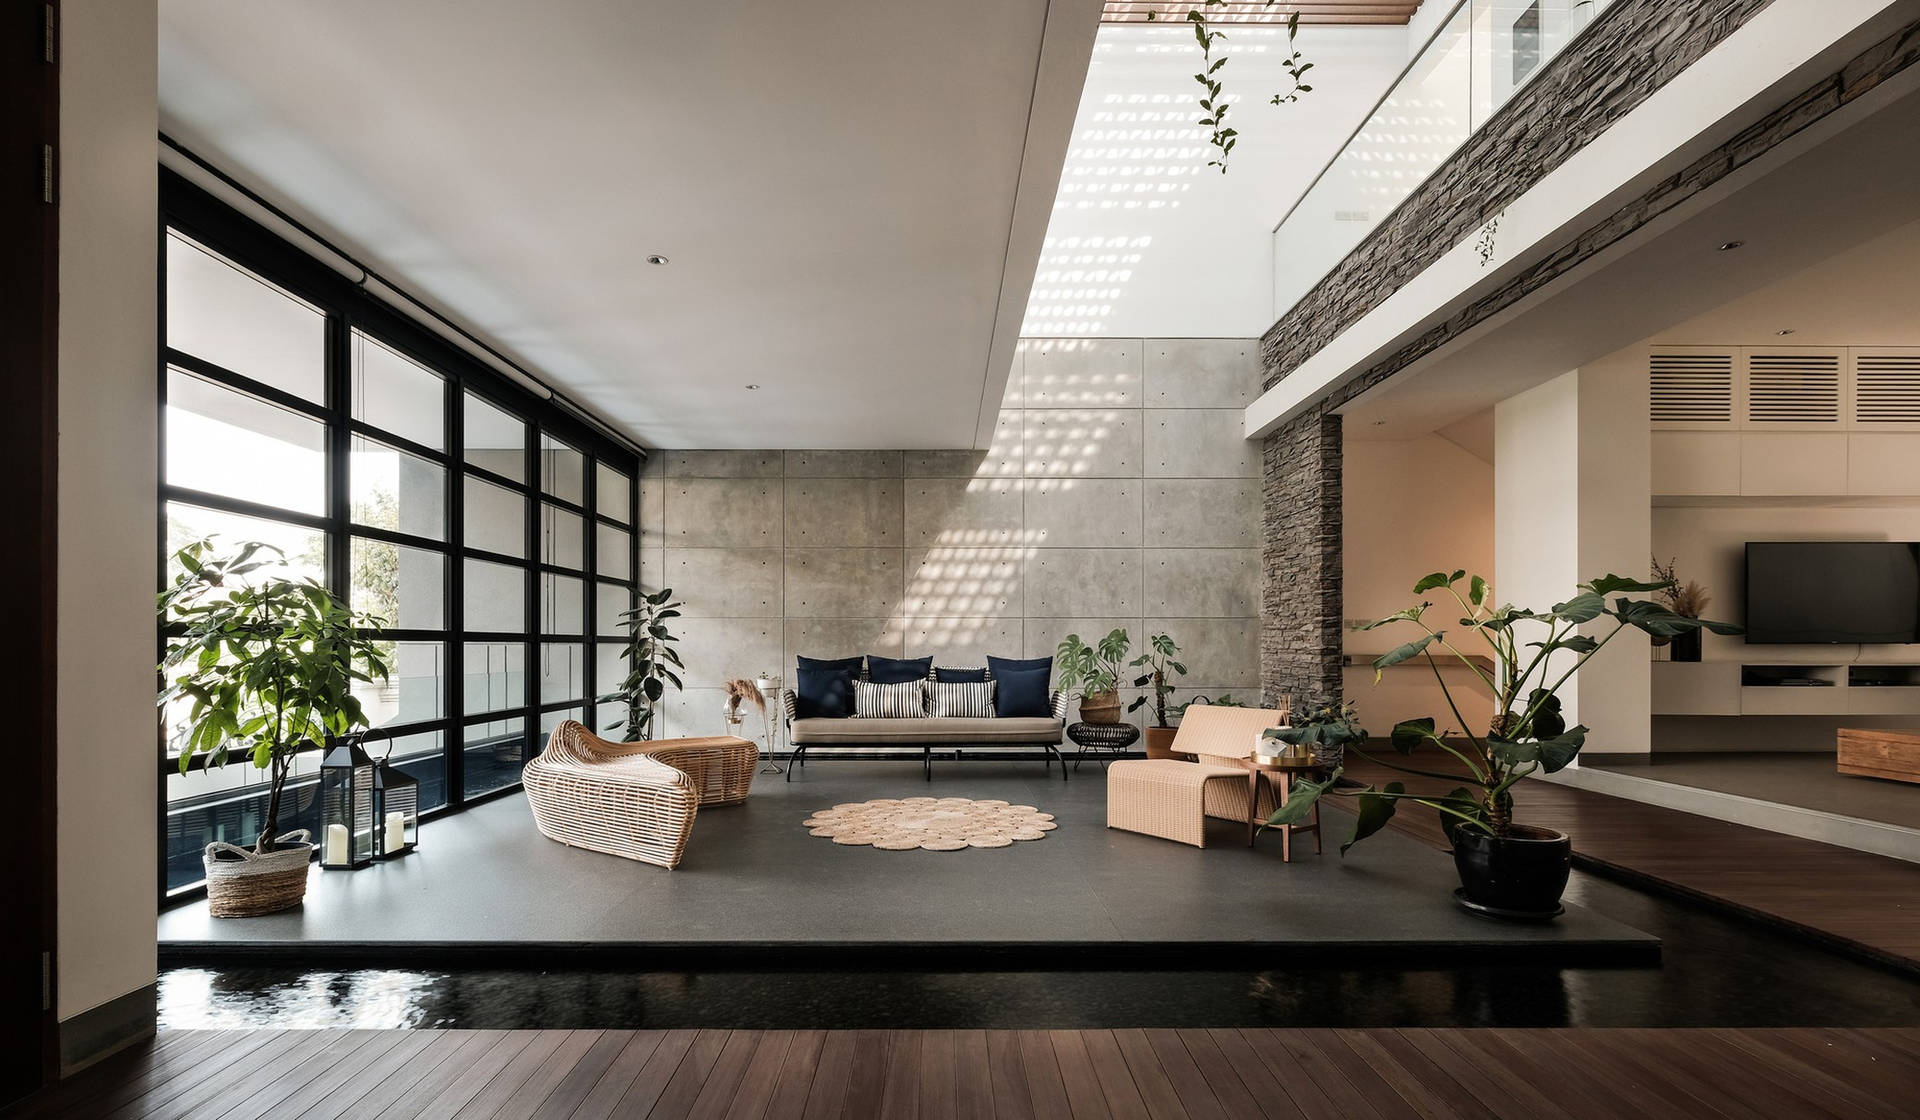 Living Room With Embossed Flooring Wallpaper